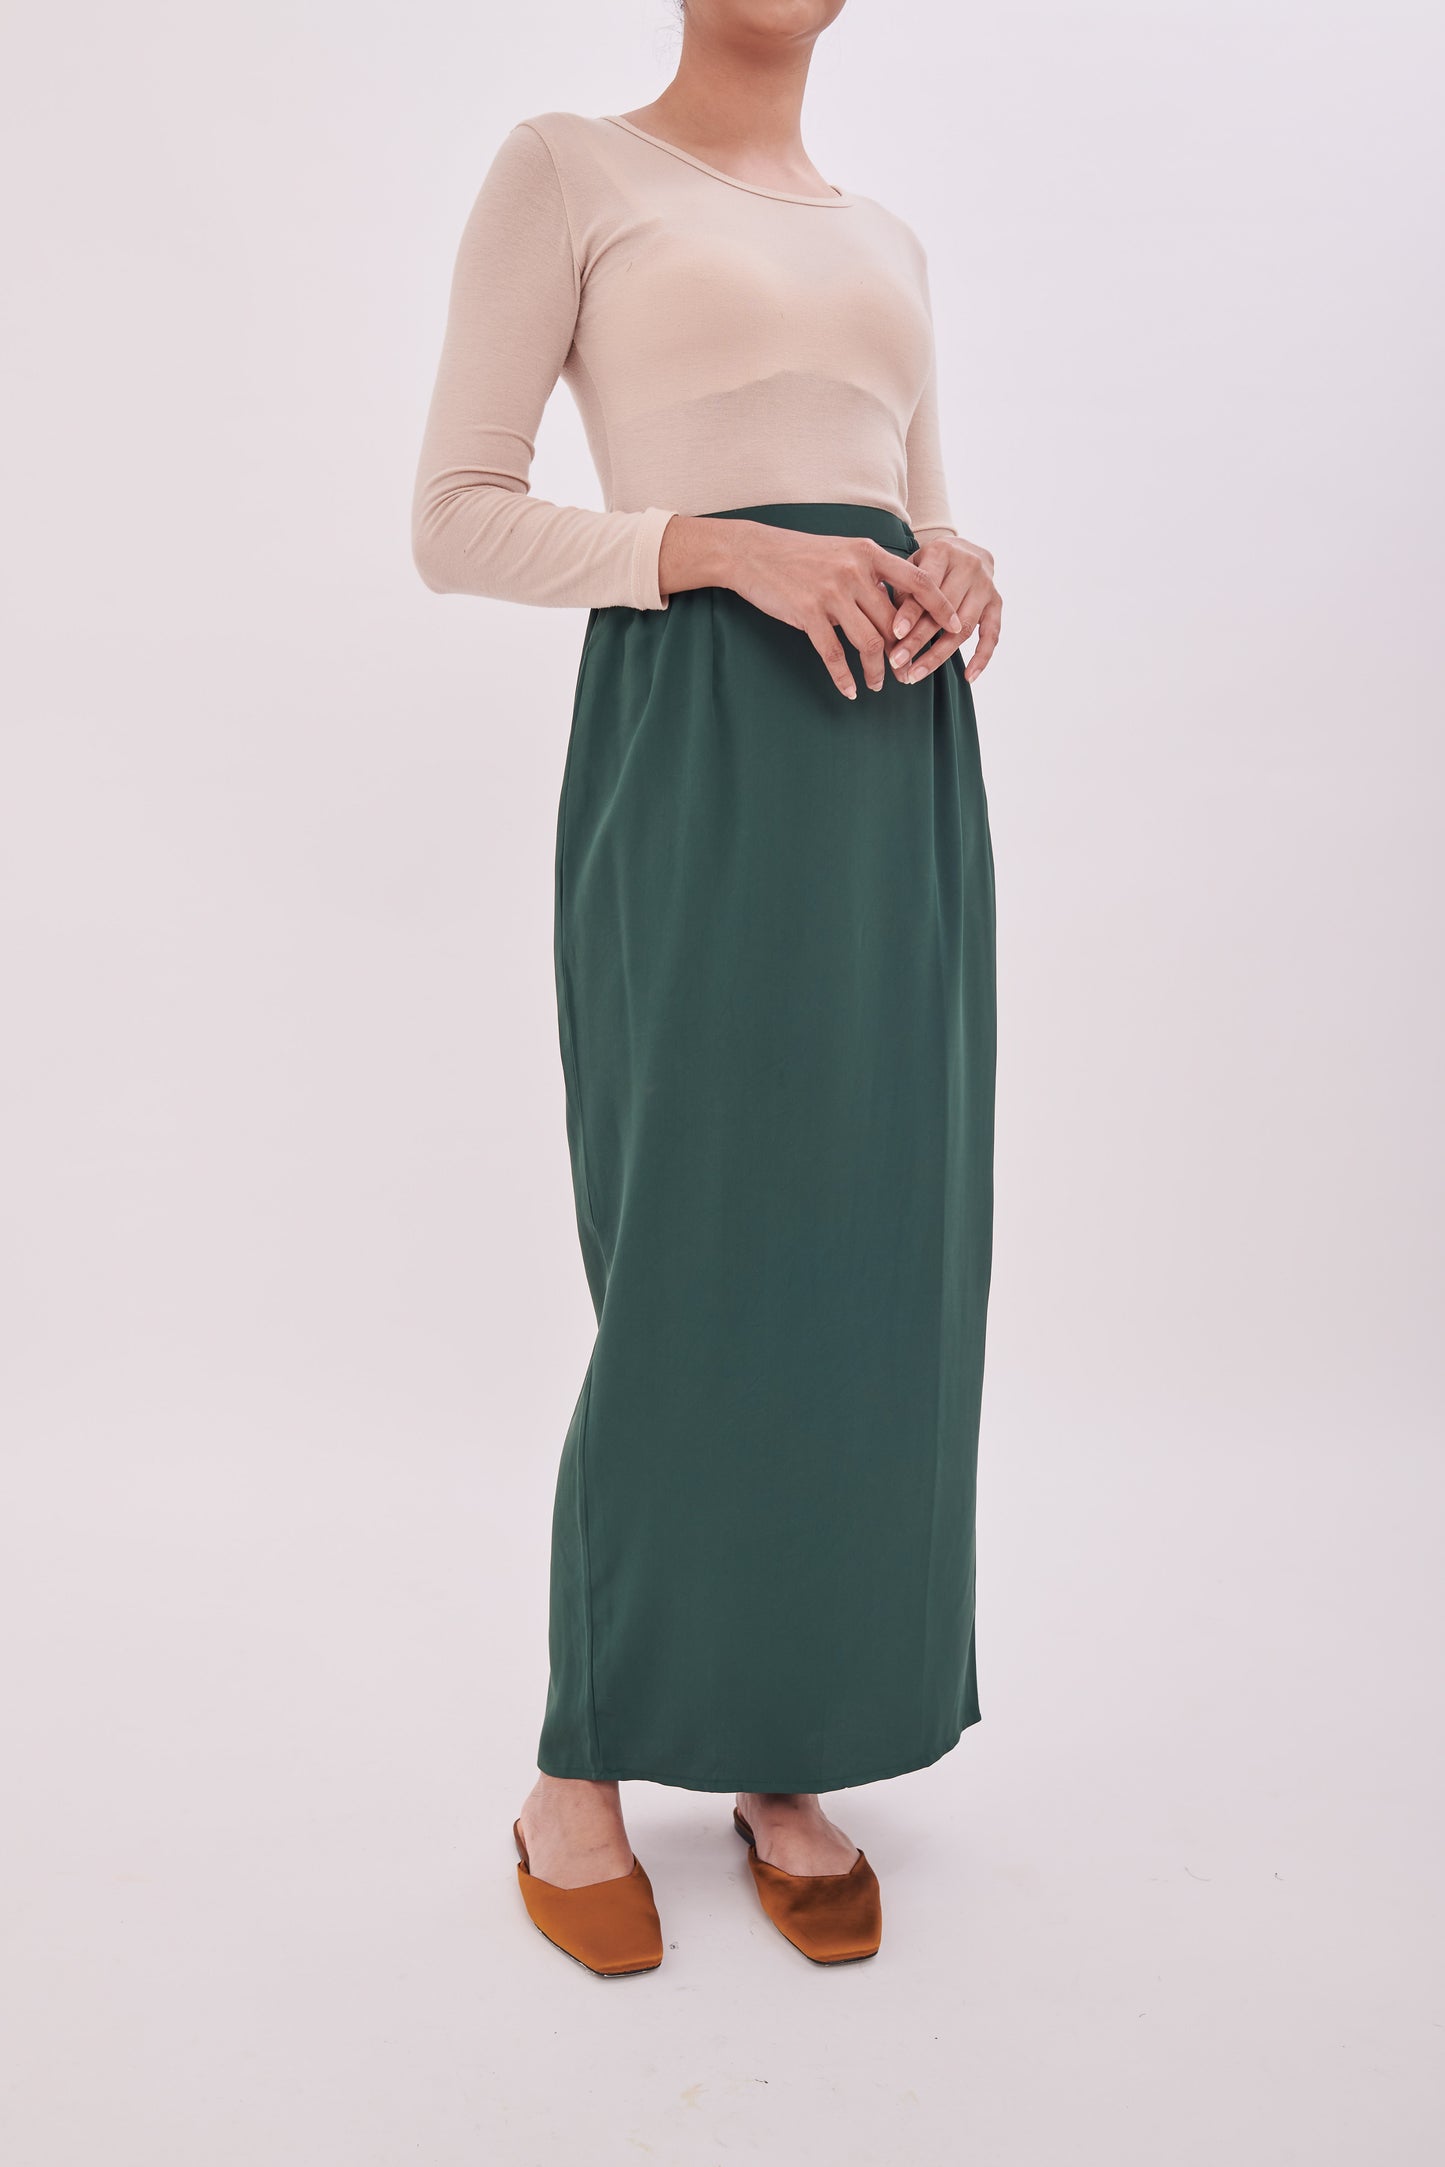 Edza Skirt in Green